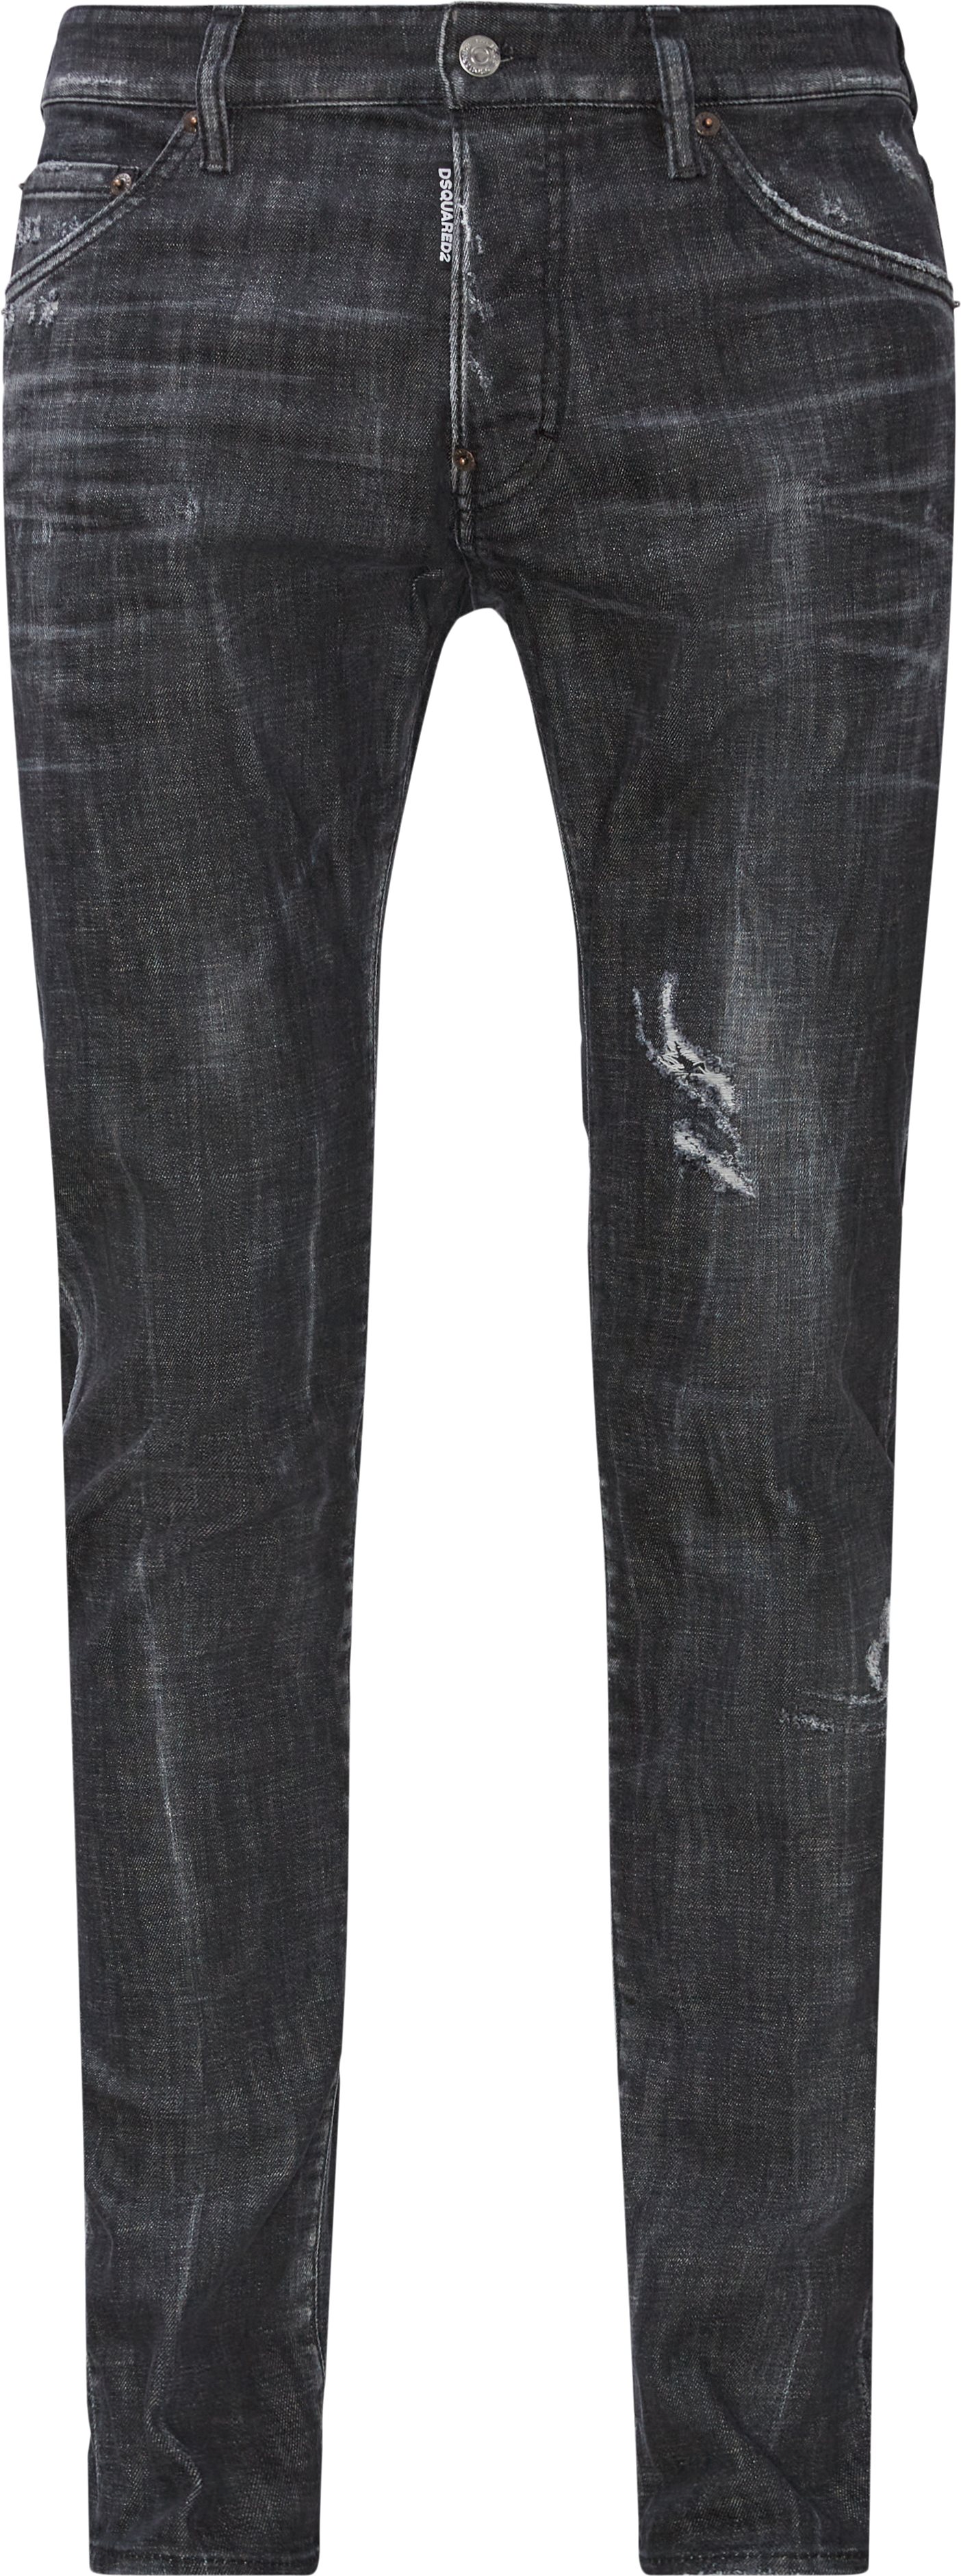 Cool Guy Jeans - Jeans - Slim fit - Black